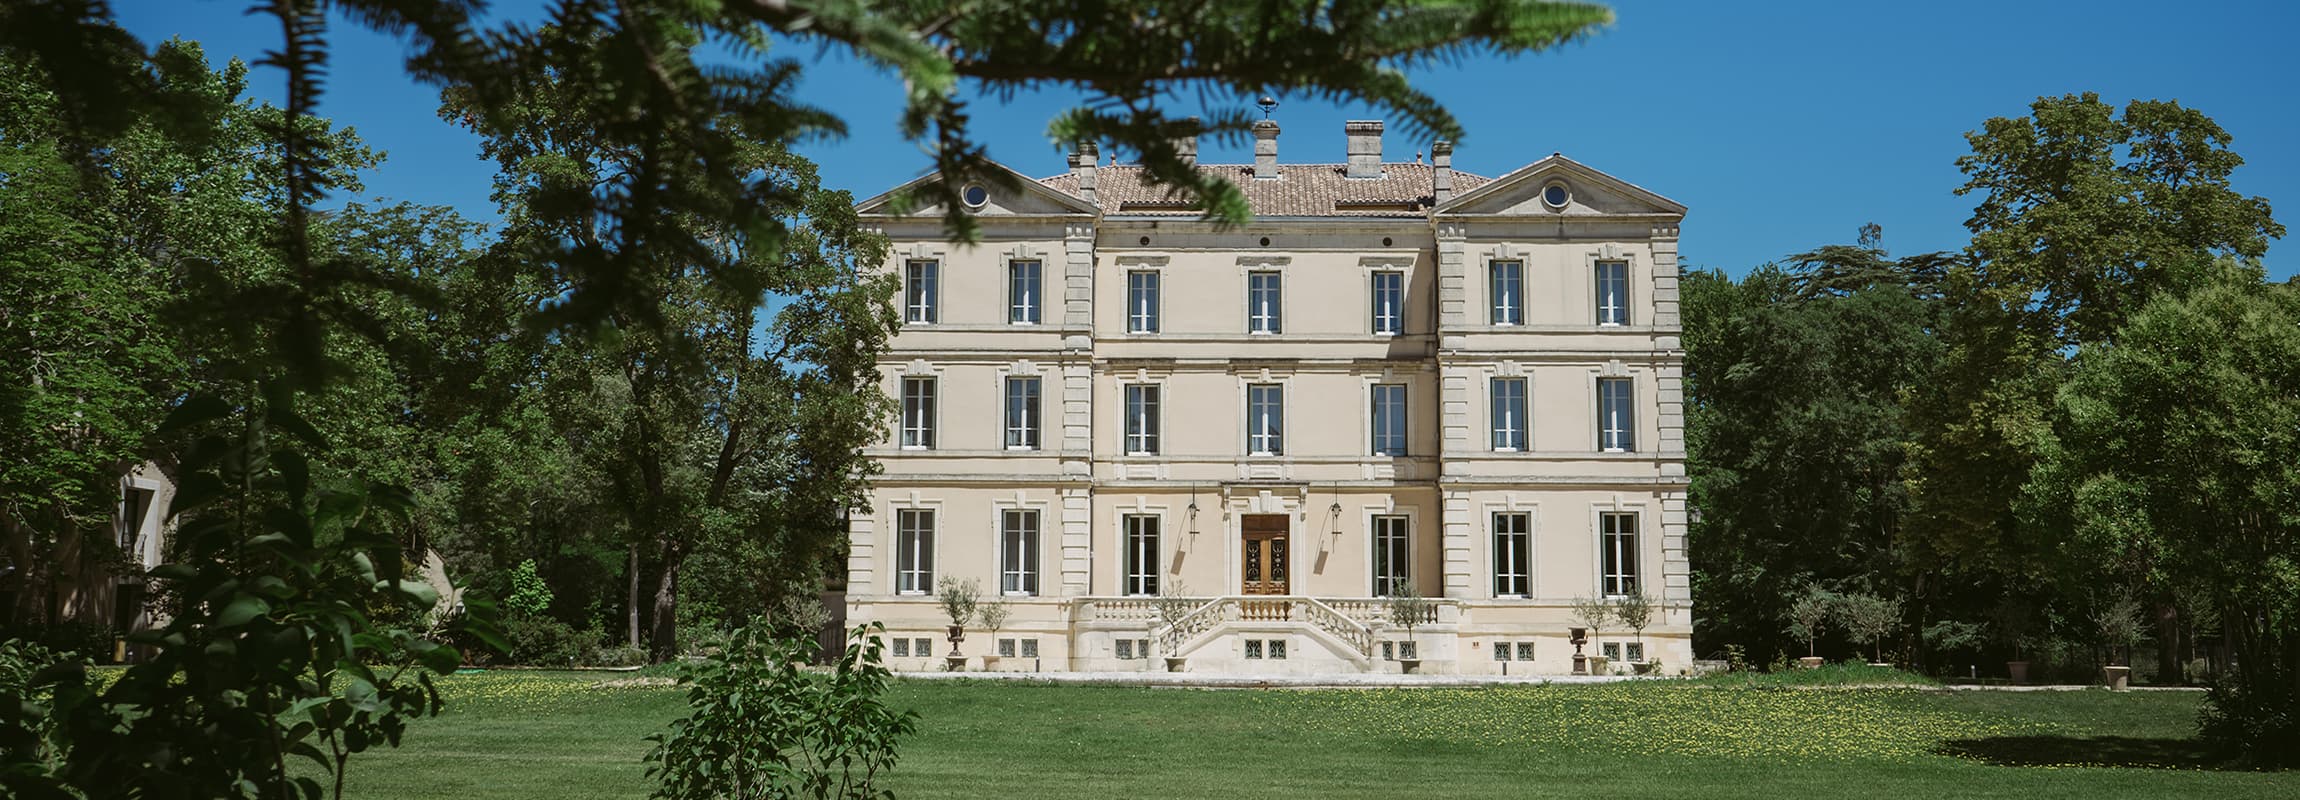 Surround yourself with nature at Château de Montcaud